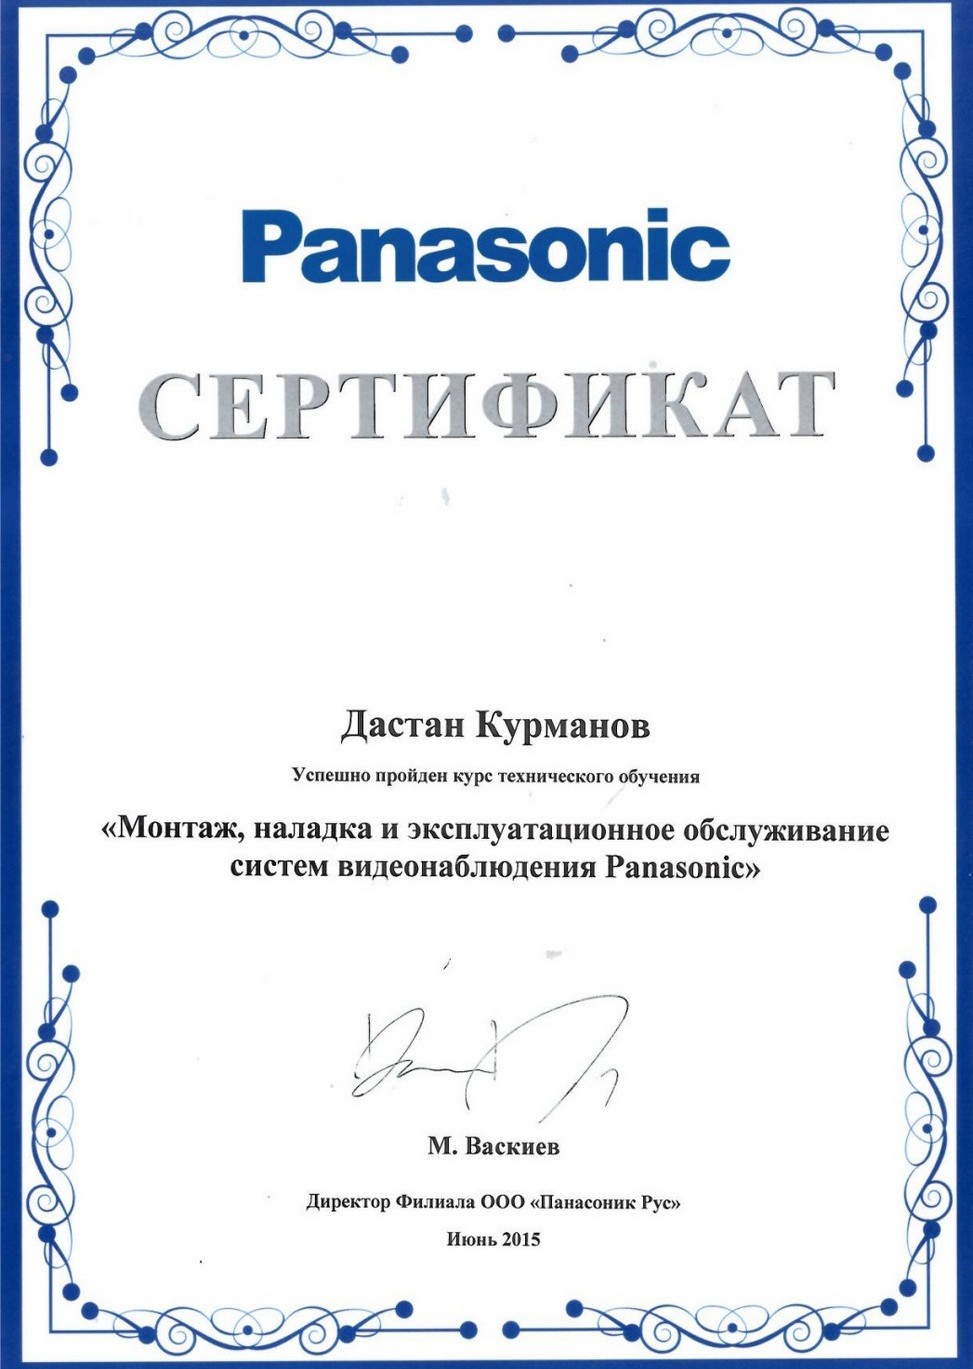 Сертификат компании Panasonic